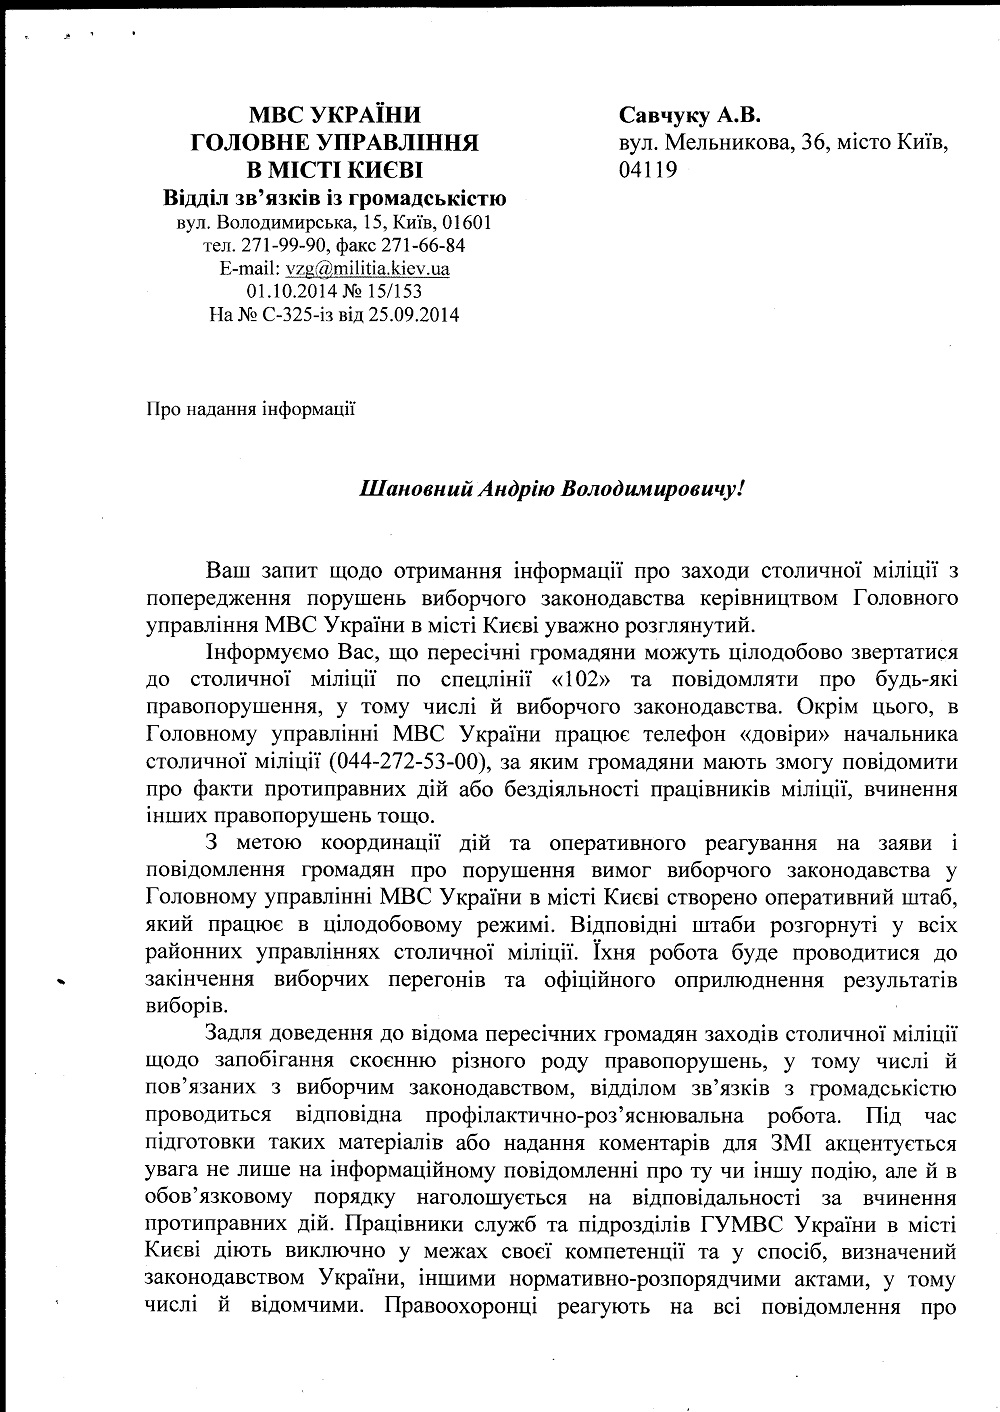 news 02 10 2014 Kiev Vidpovid1